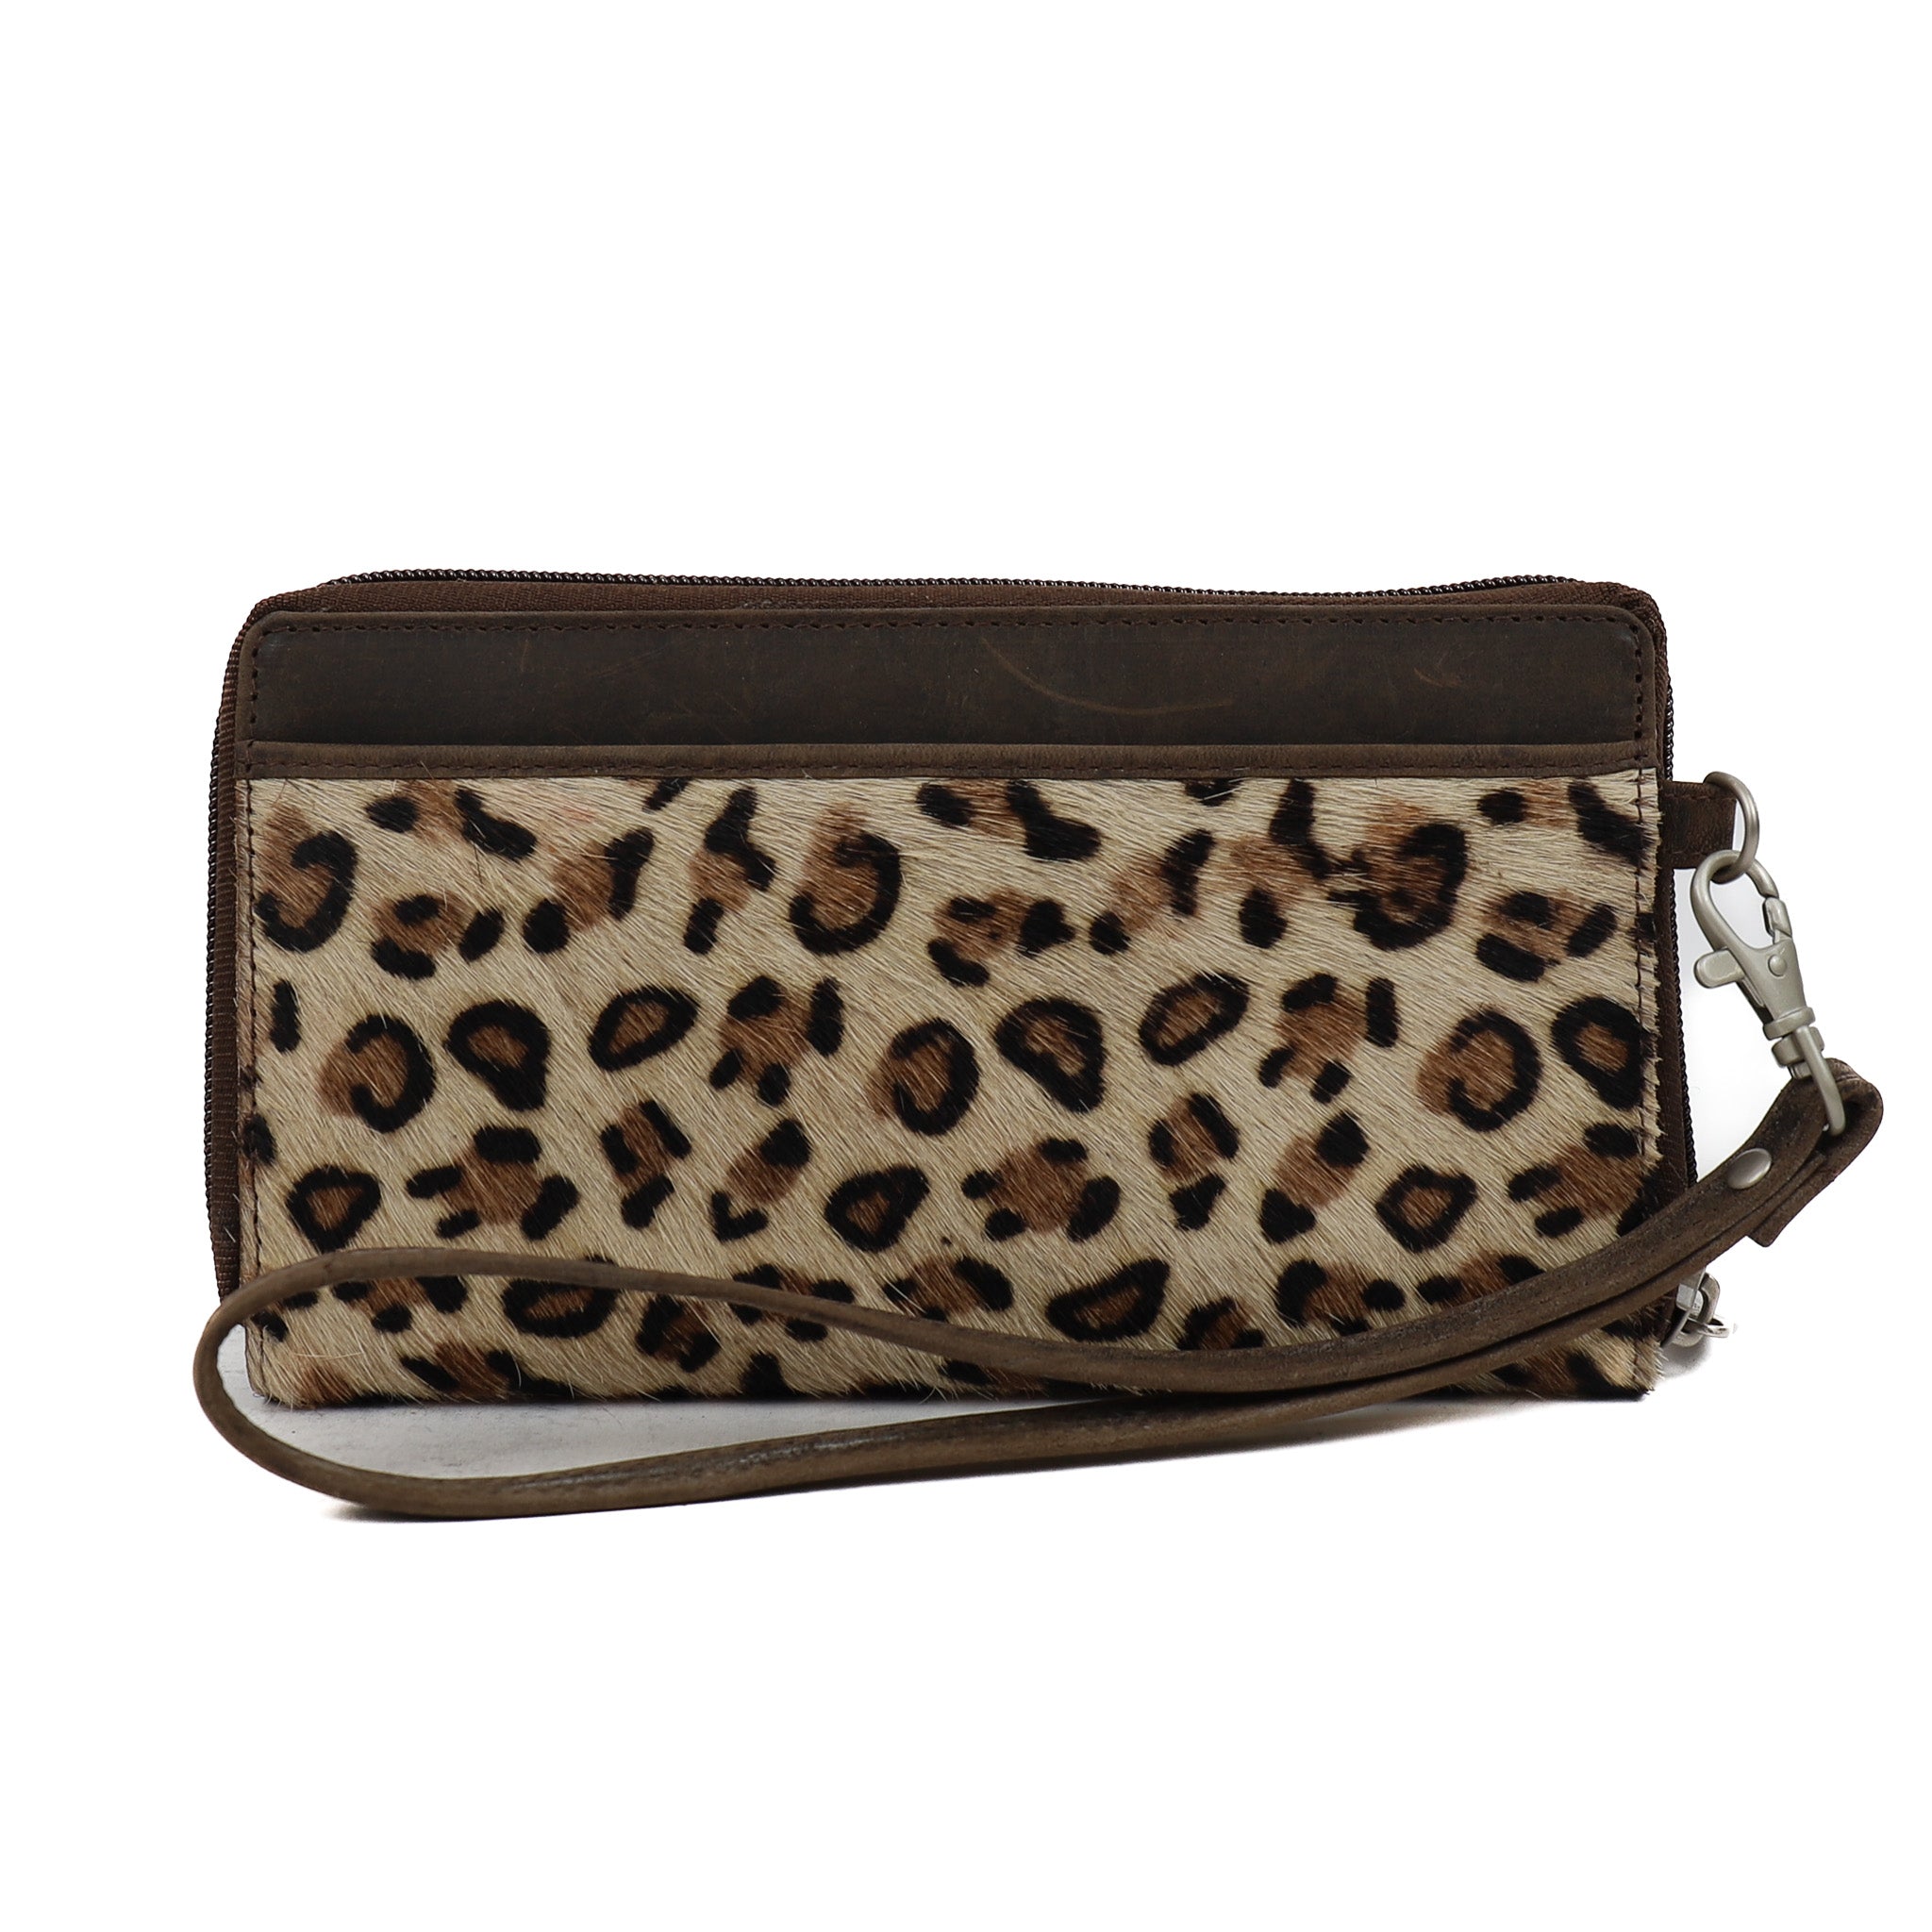 Zip wallet 'Matilda' cheetah